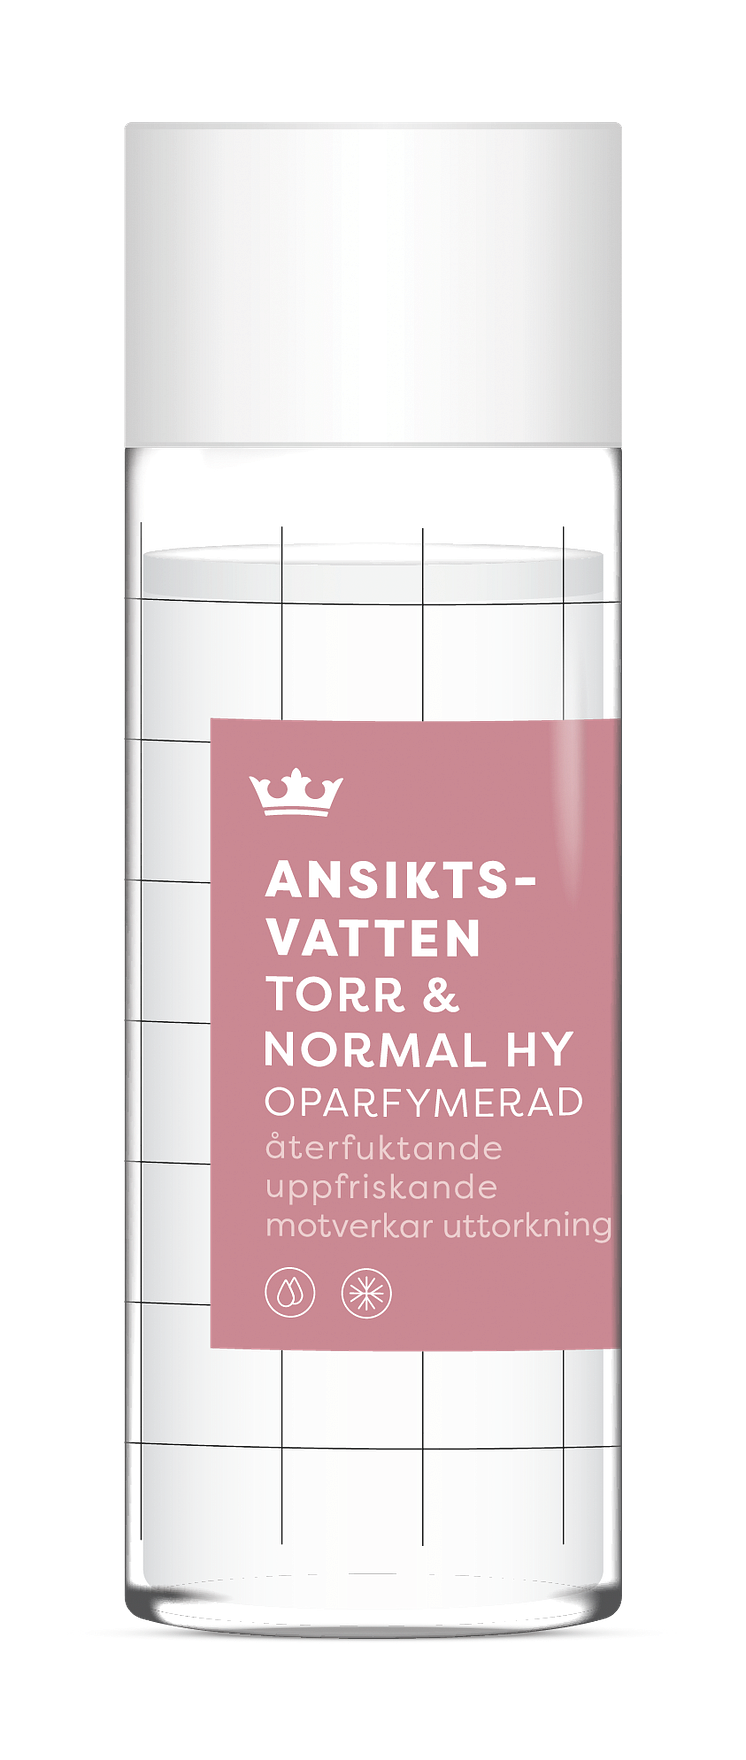 Kronan_Ansiktsvatten Torr & Normal OPARF